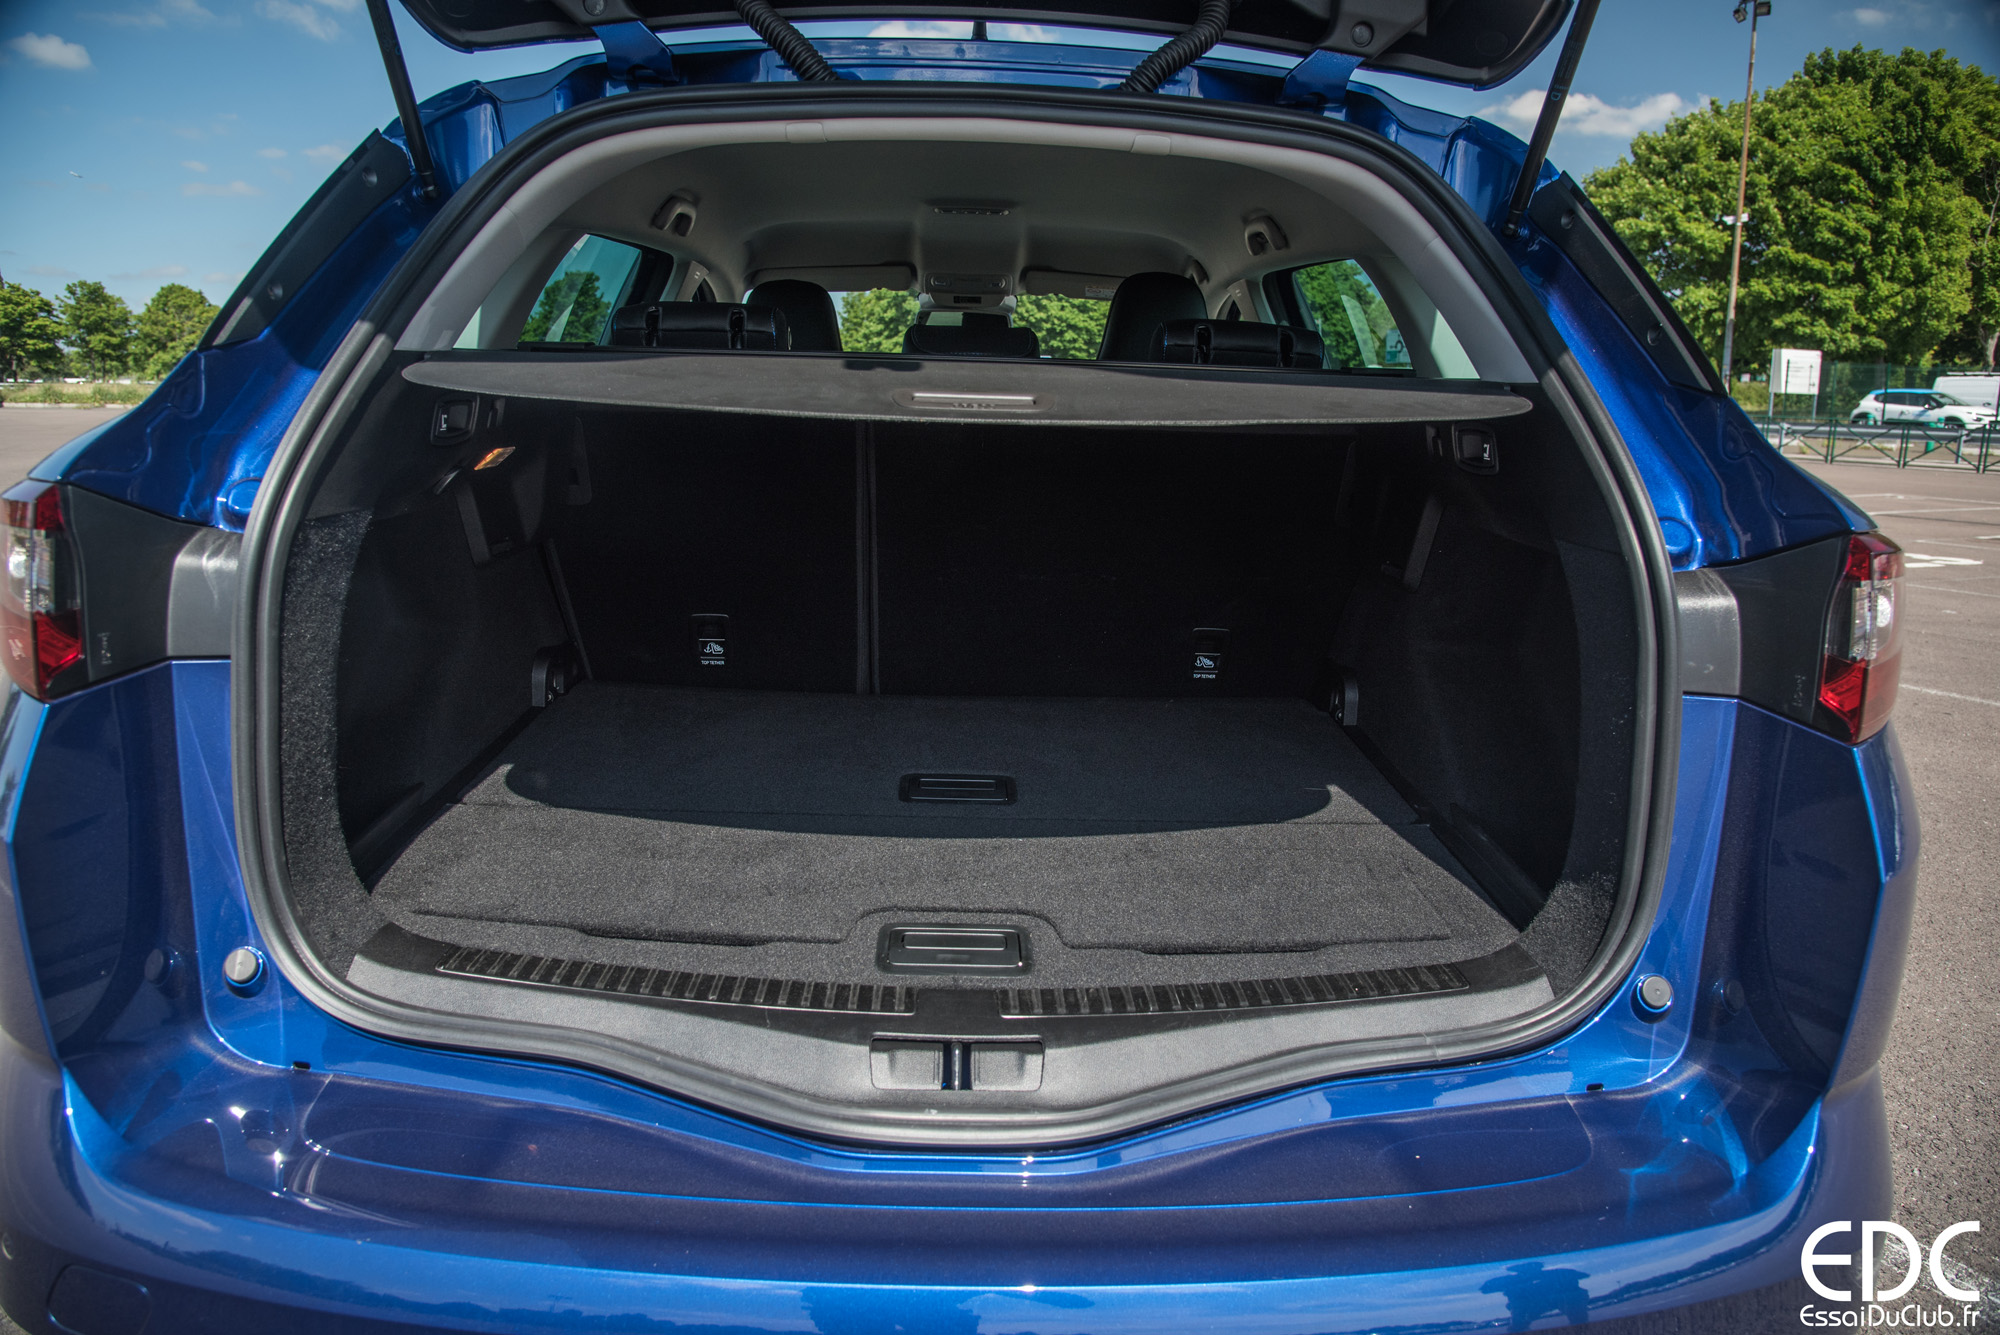 Рено лагуна универсал багажник. Рено Меган 4 универсал багажник. Багажник Рено Меган IV универсал. Рено Меган 4 багажник. Renault Megane 2017 багажник.